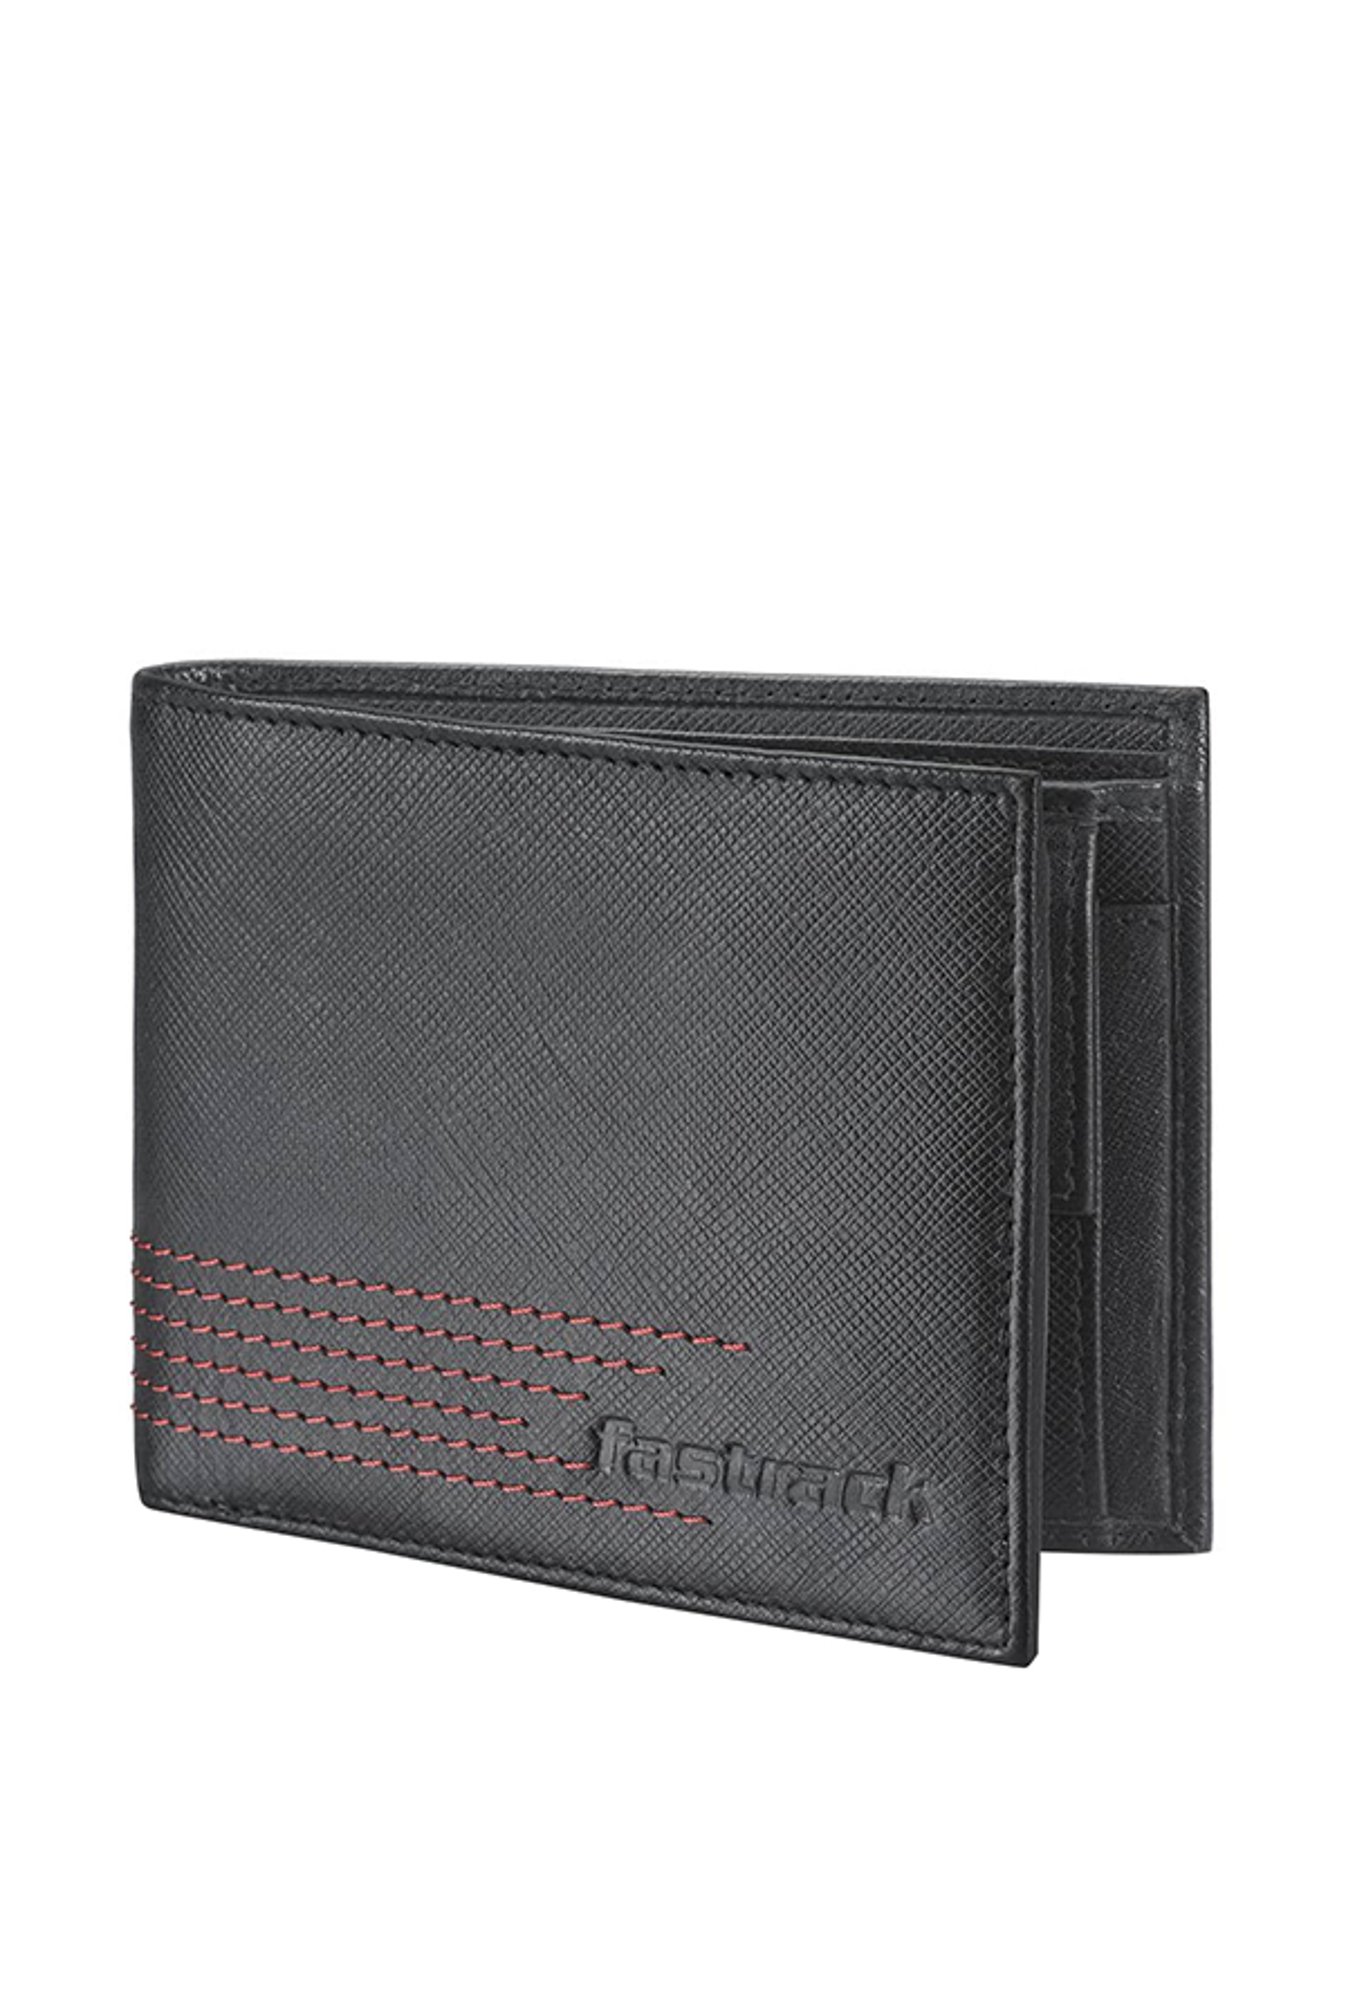 Timberland PRO Men's Genuine Leather & Canvas RFID Bifold Passcase Wallet |  eBay